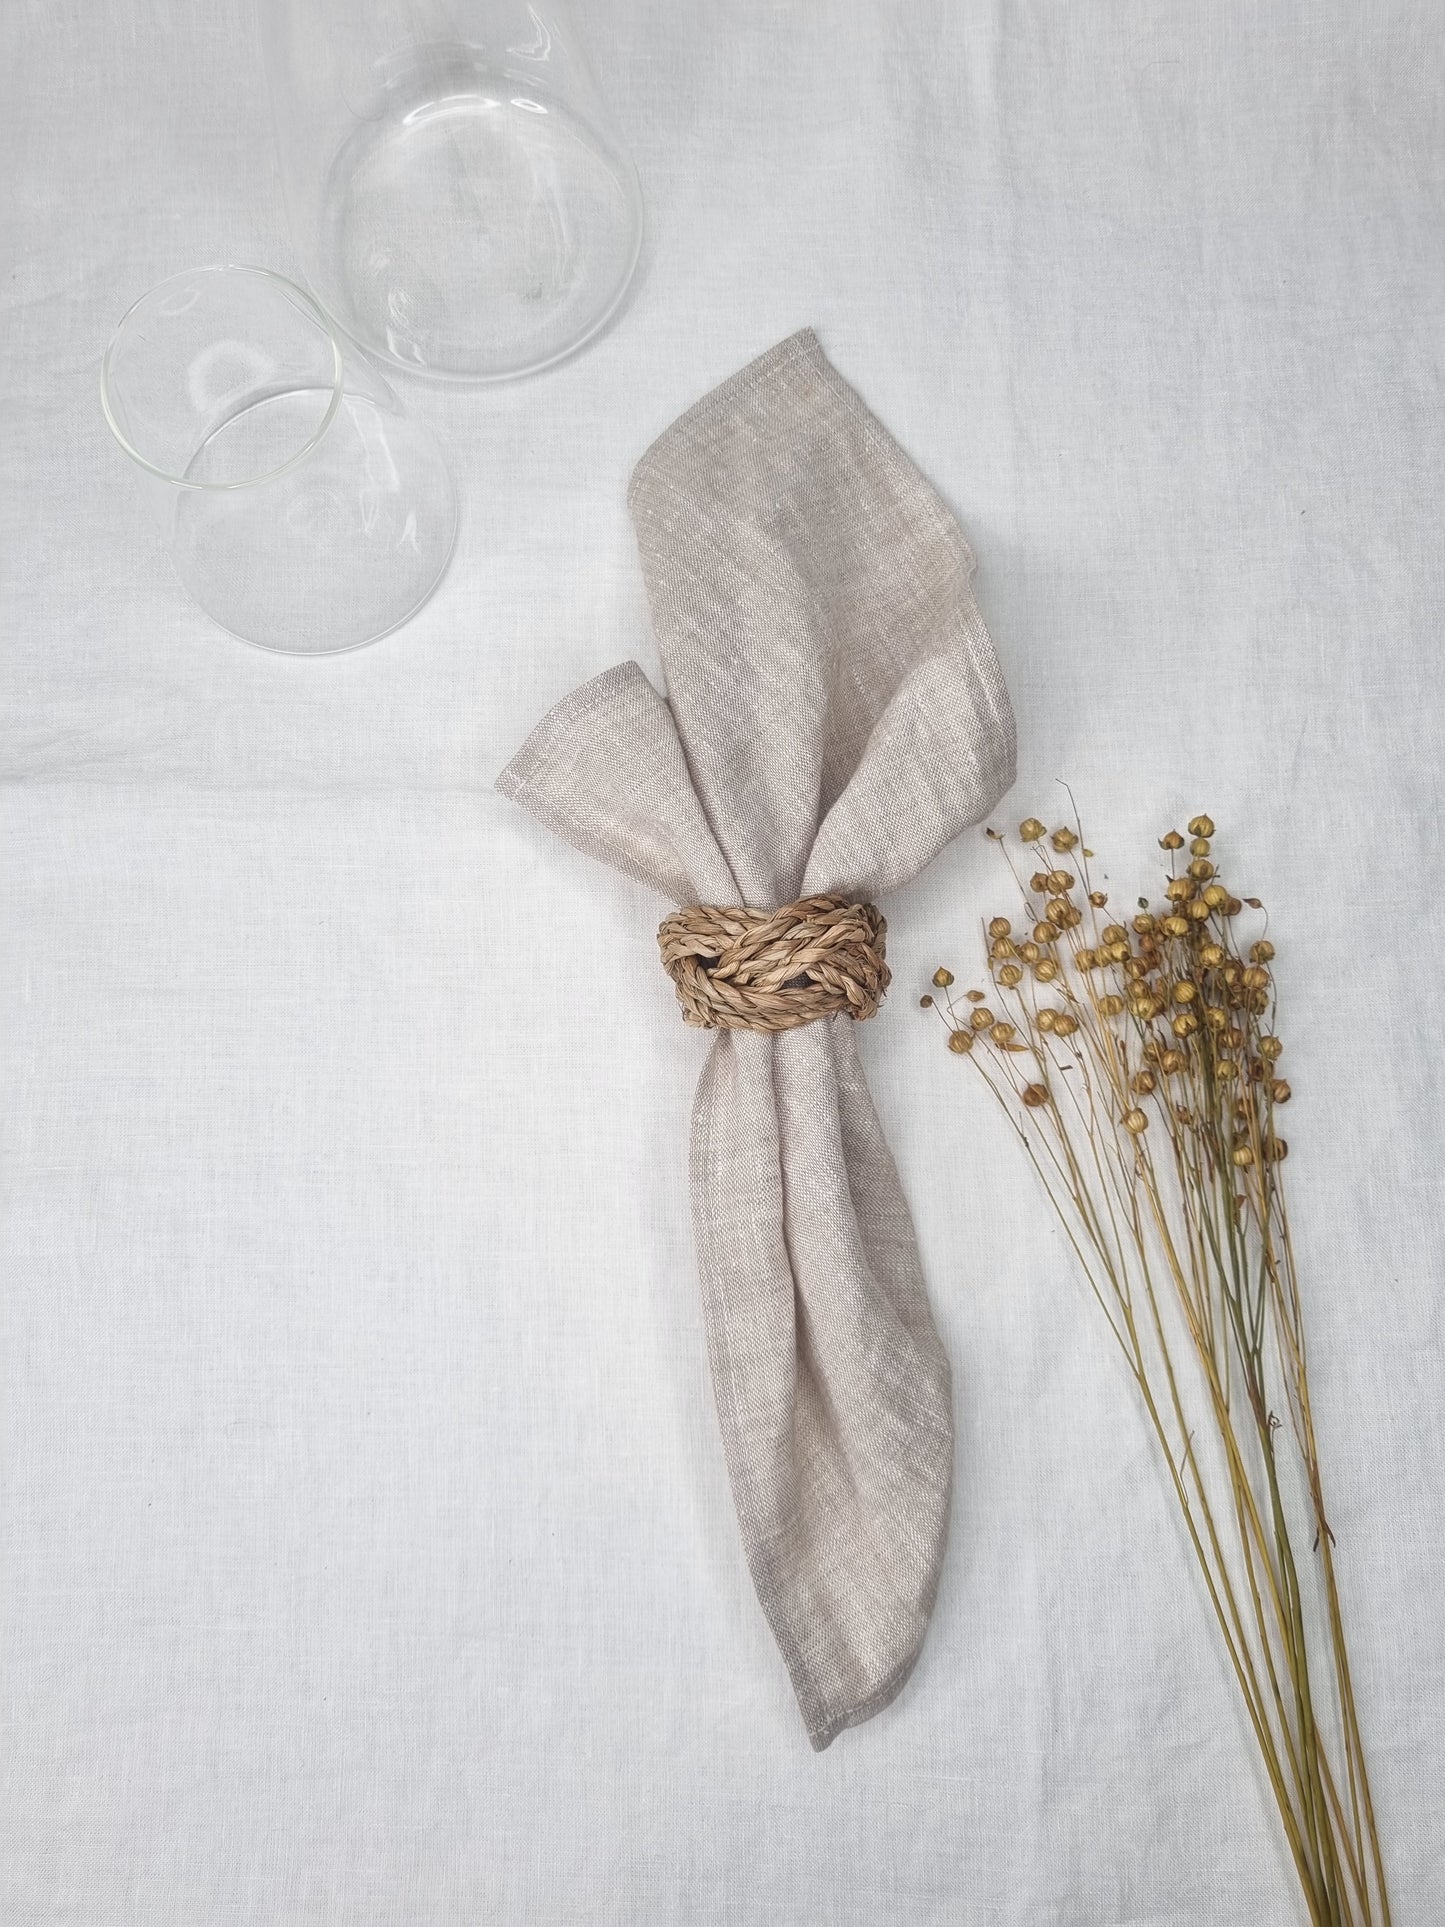 Unpainted flax linen napkins